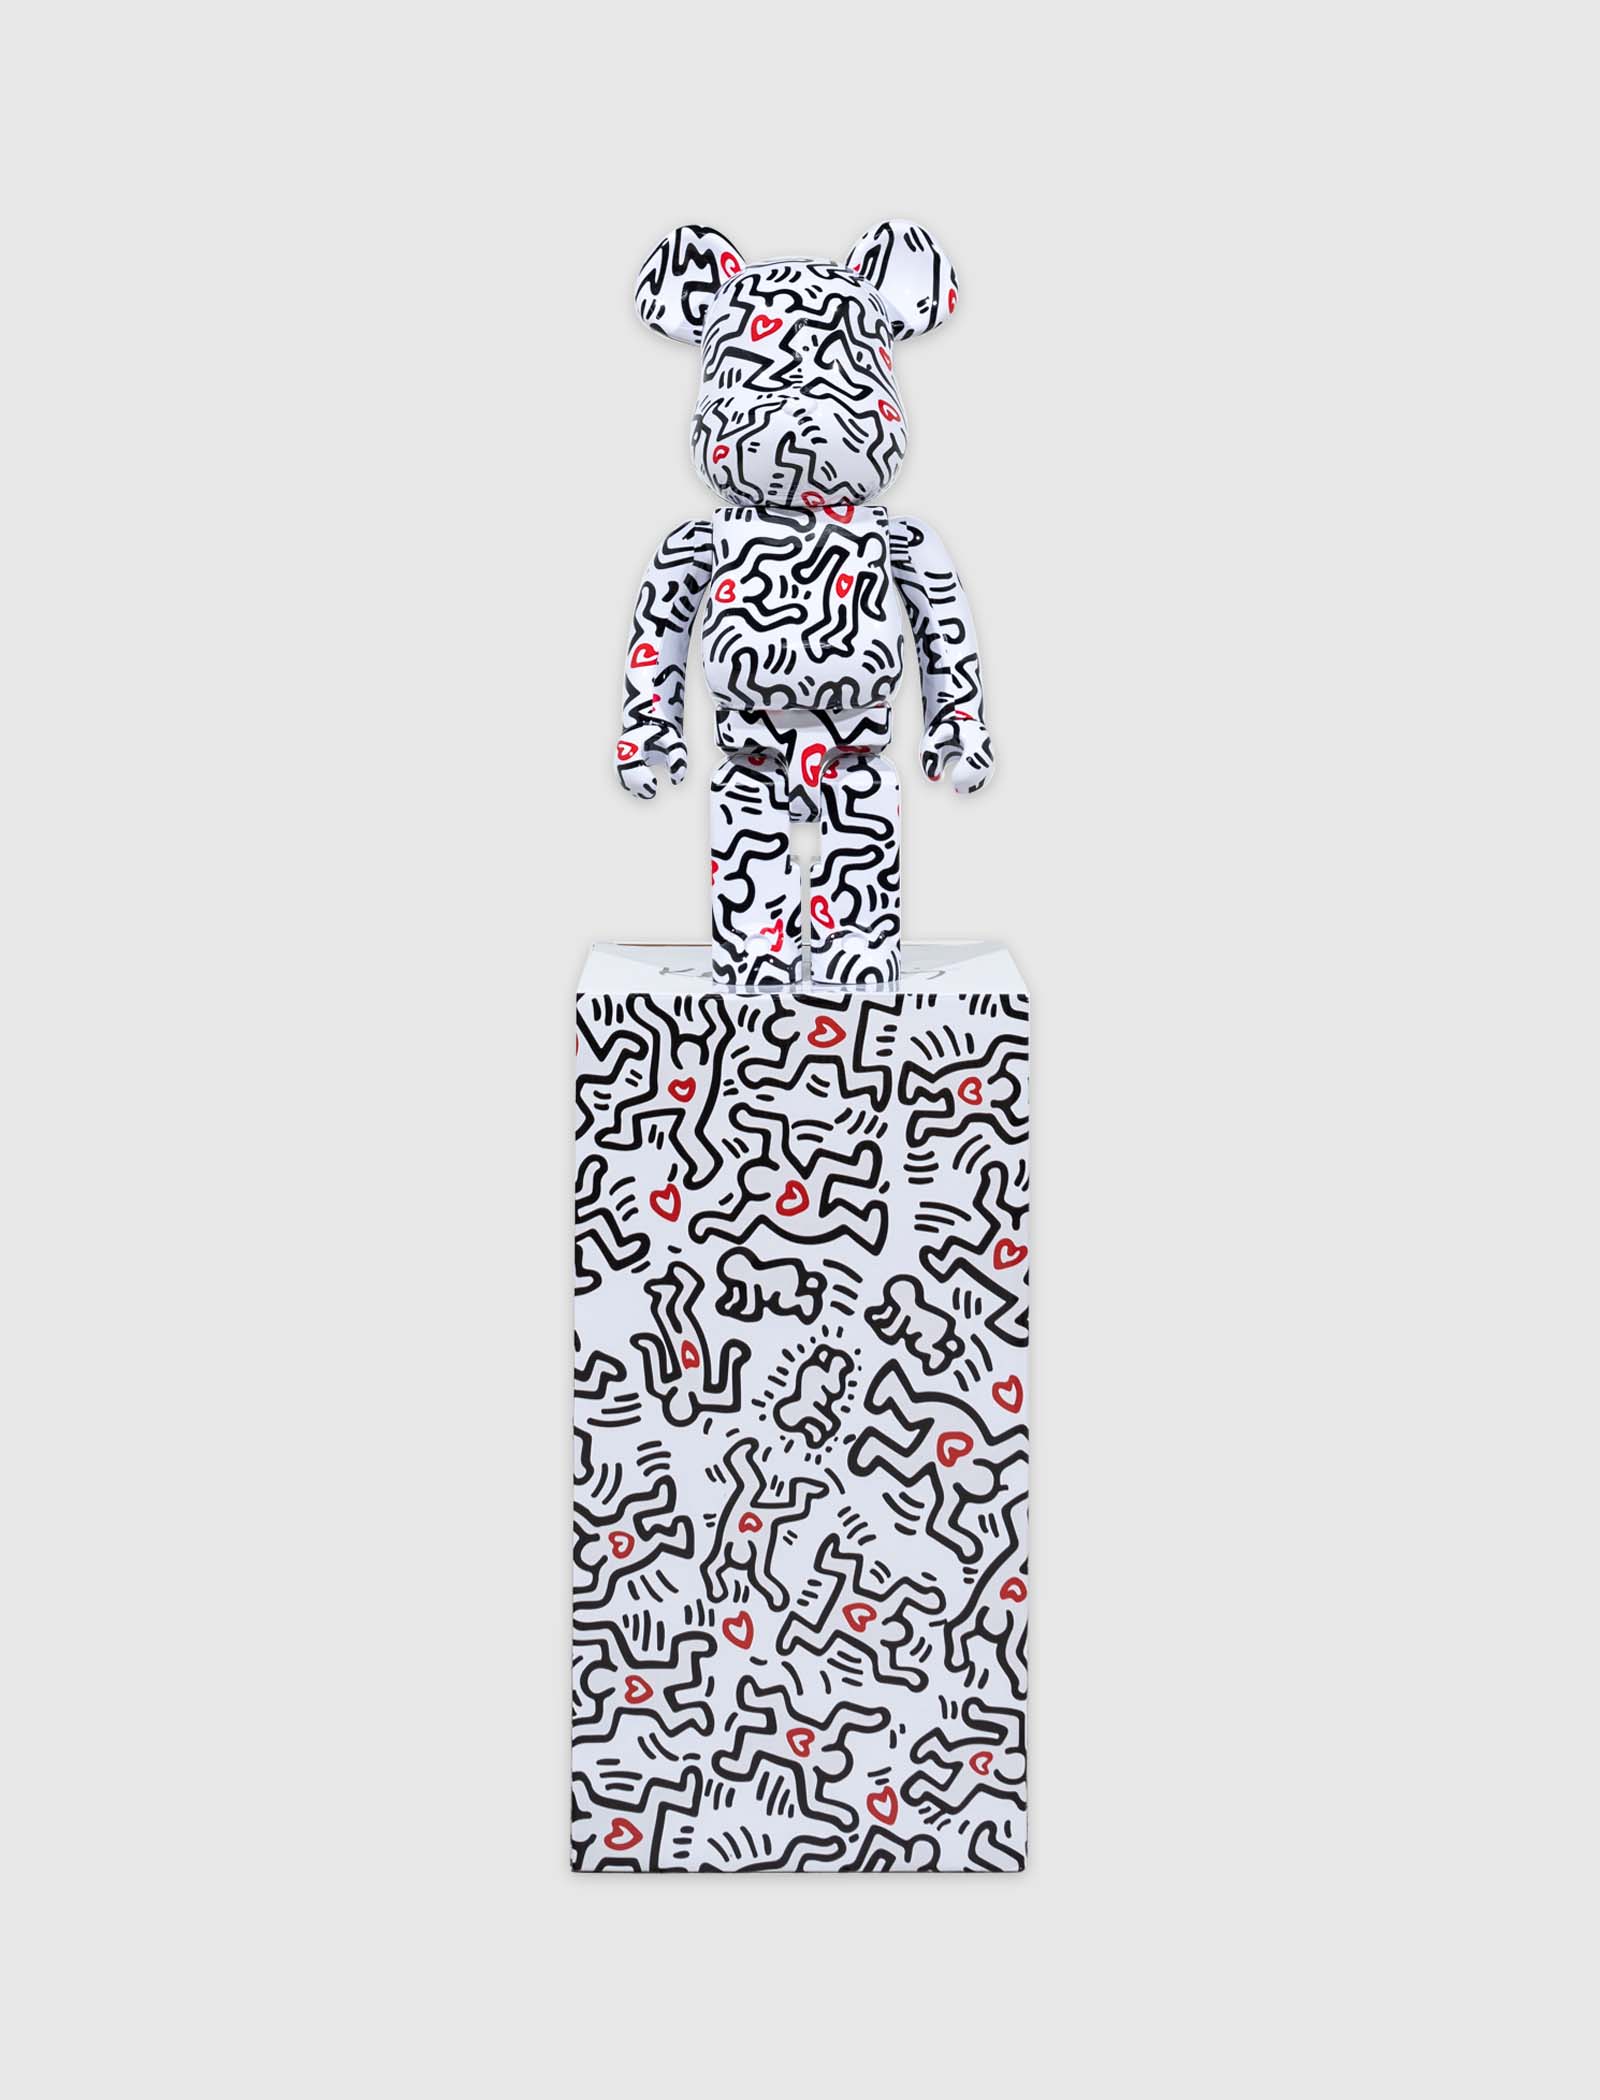 MEDICOM TOY - Bearbrick 1000% Keith Haring